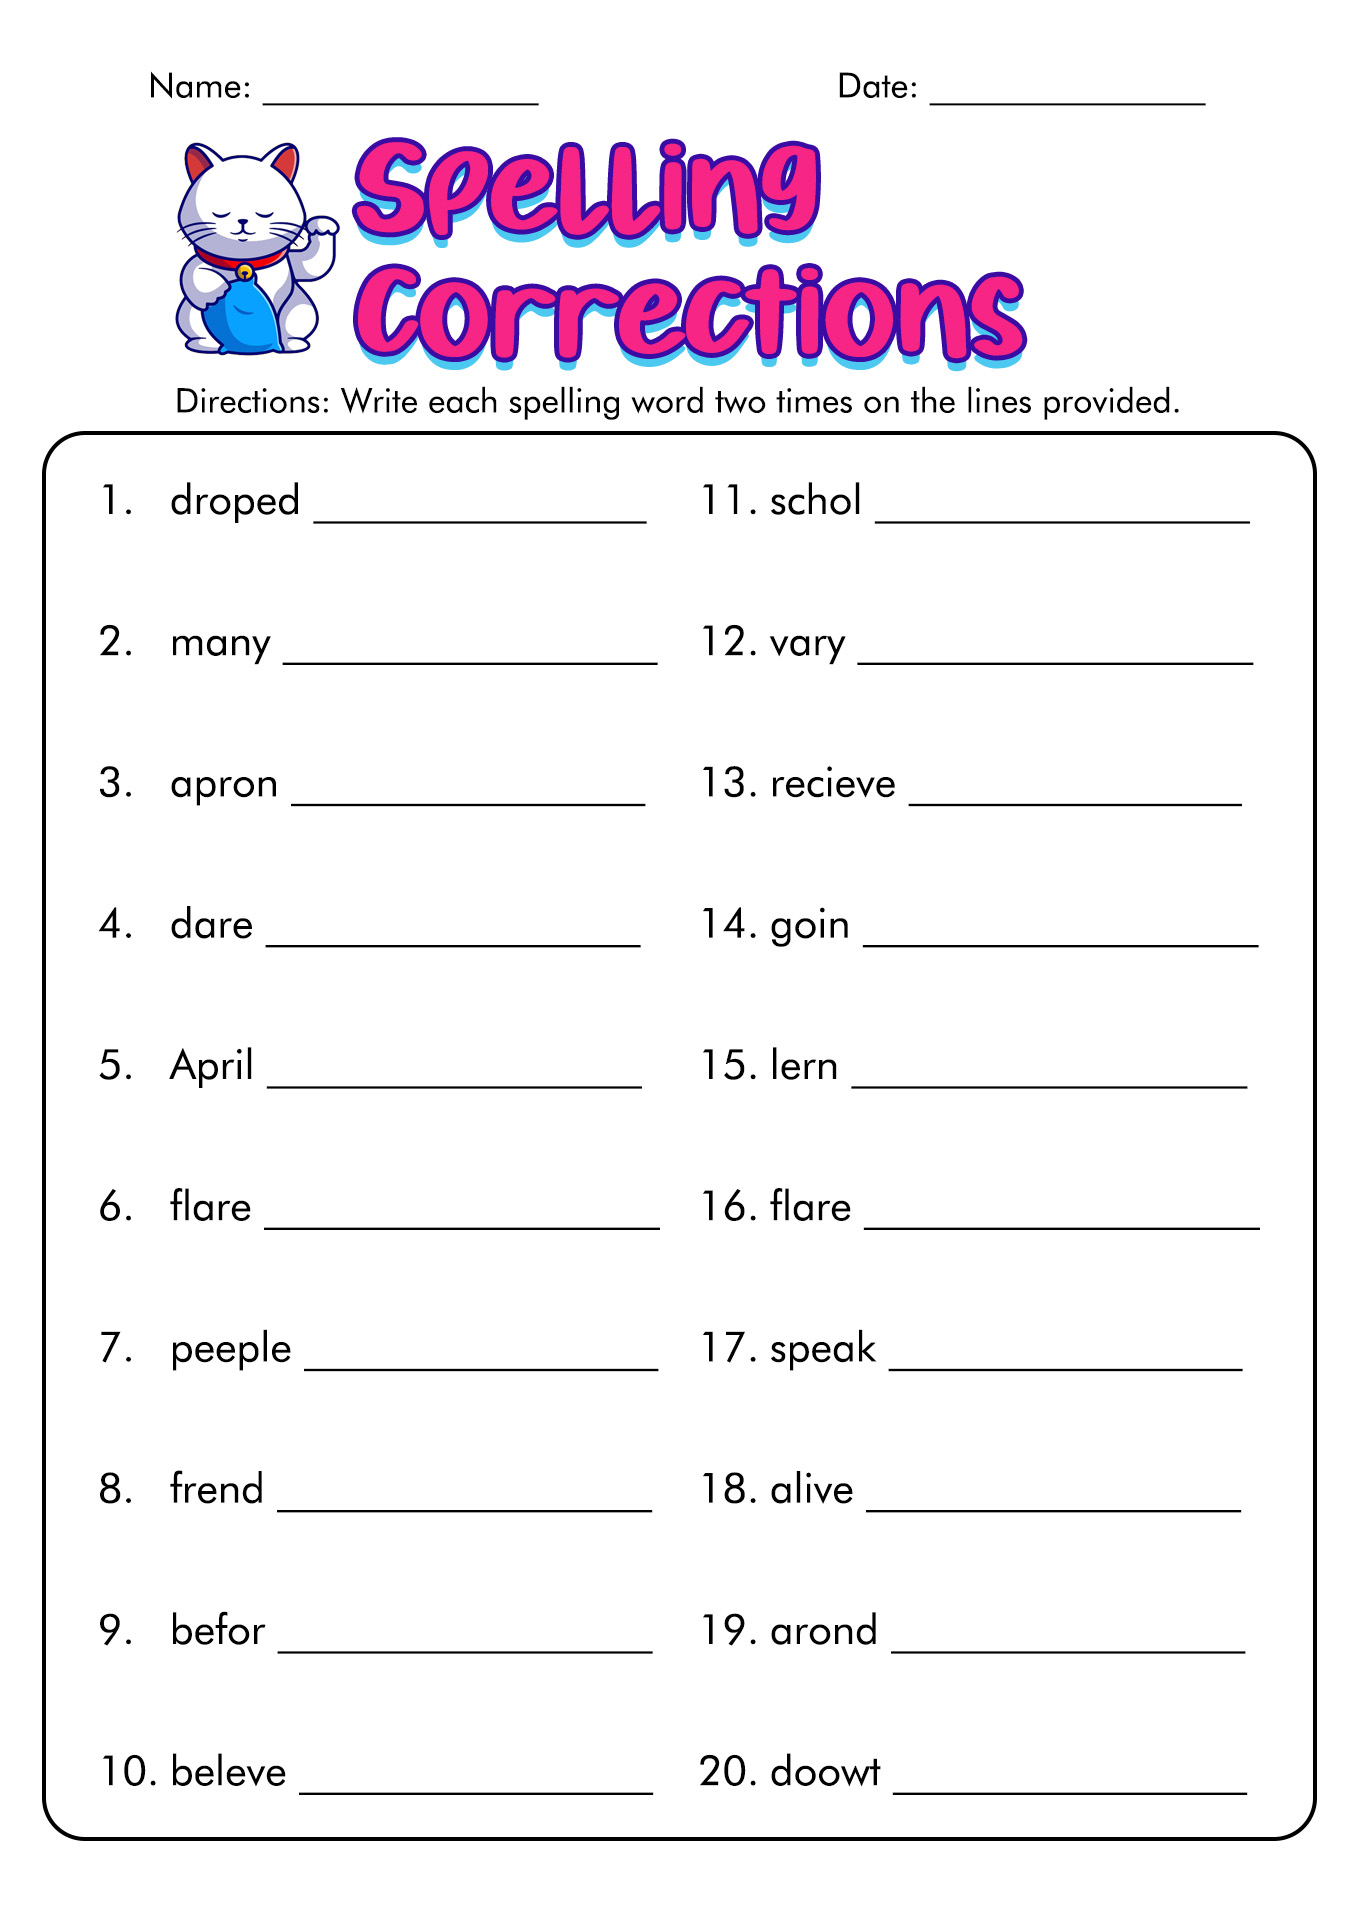 Blank Spelling Worksheets 3rd Grade Image